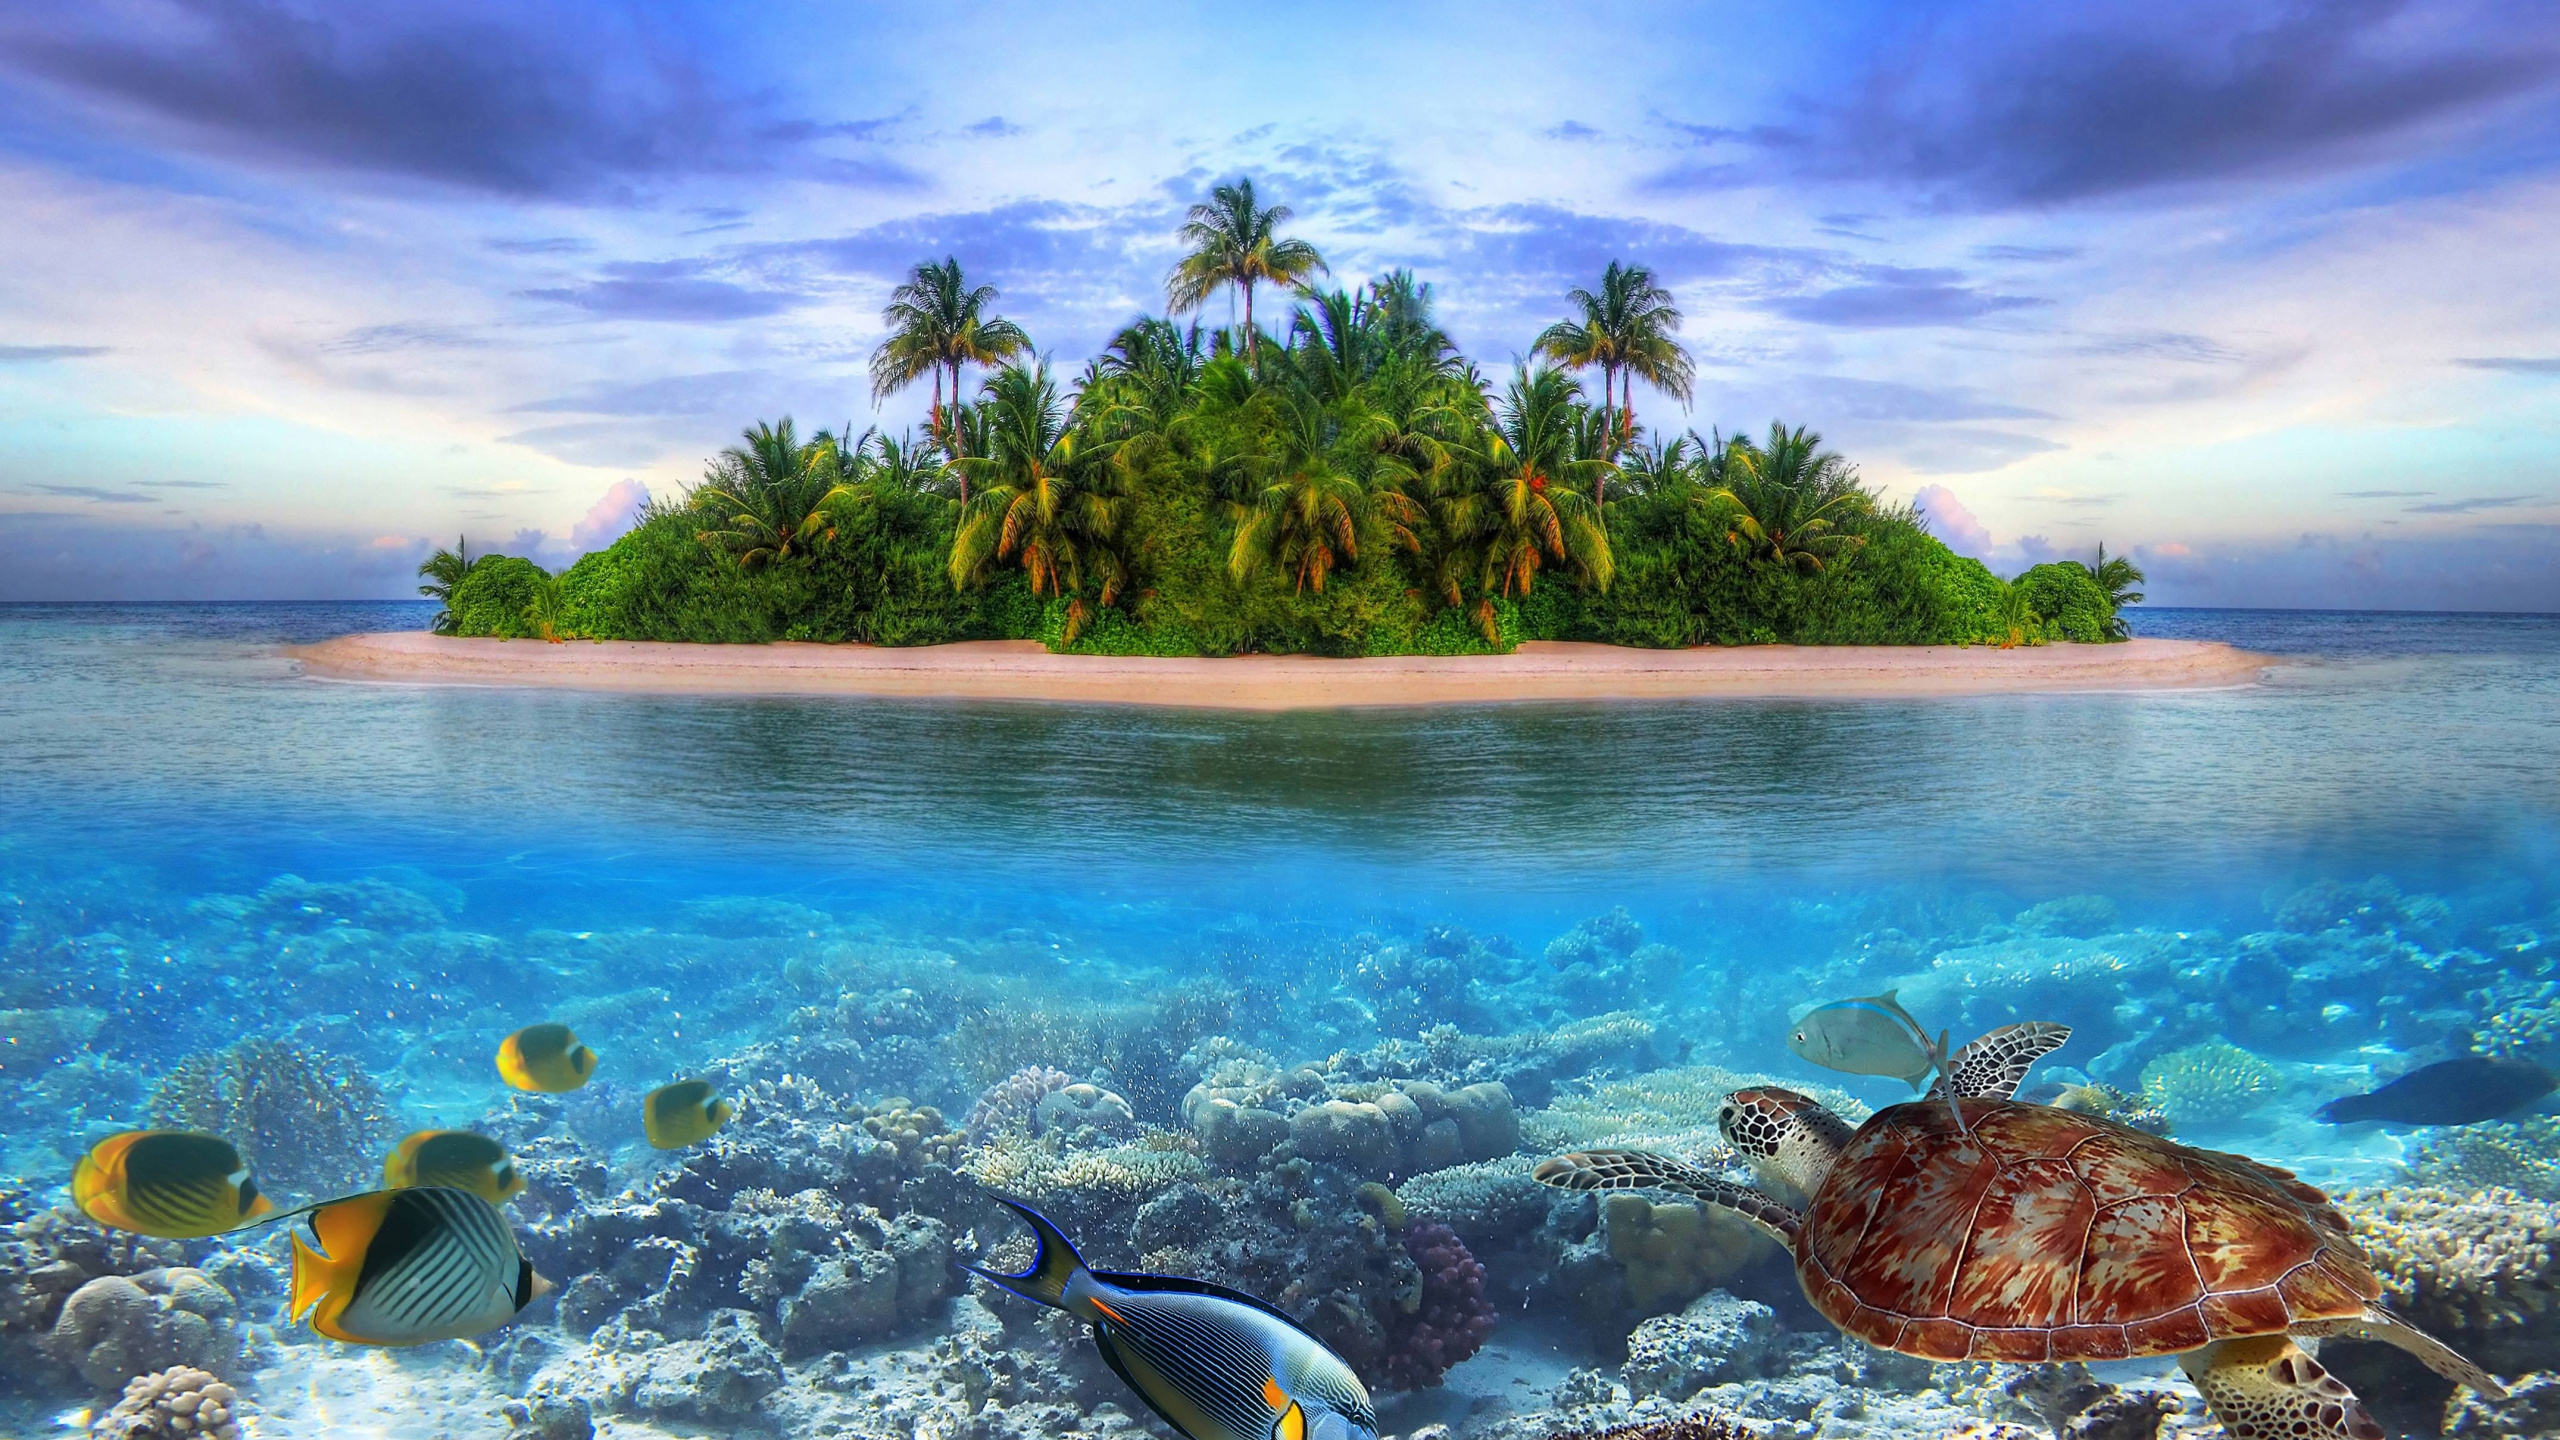 School of Fish on Water. Wallpaper in 2560x1440 Resolution